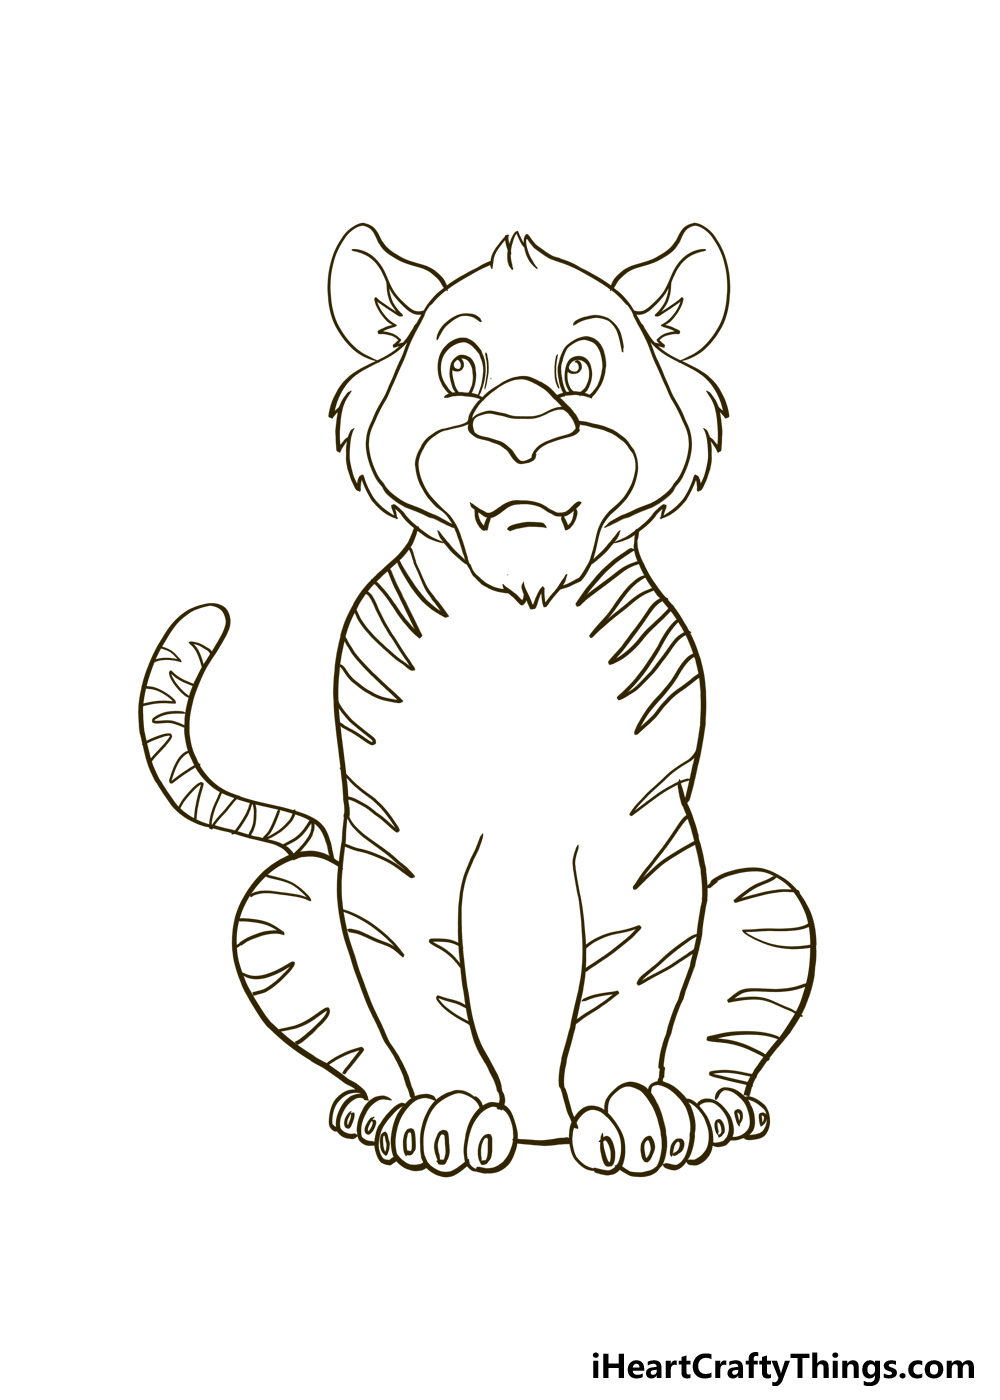 How to Draw A Cartoon Tiger step 5